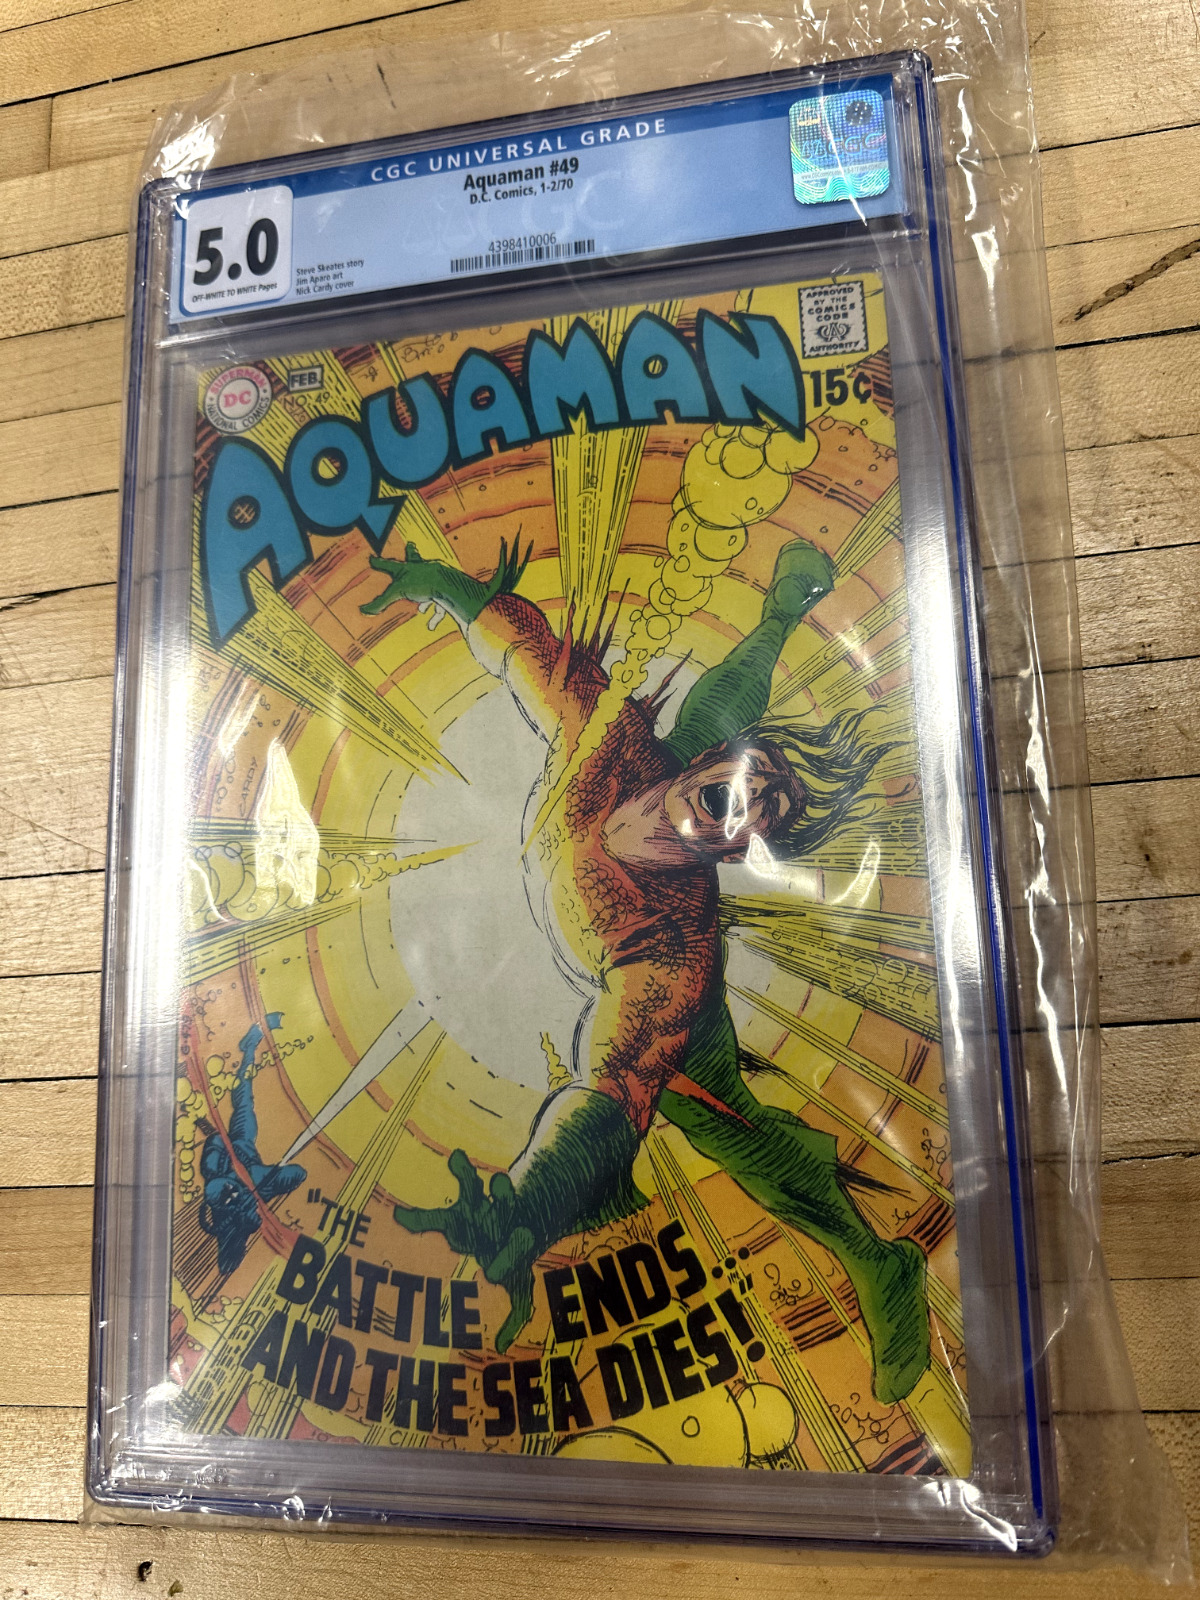 Aquaman #49 DC Comics 1970 CGC 5.0 NICK CARDY COVER 1ST BRONZE AGE AQUAMAN